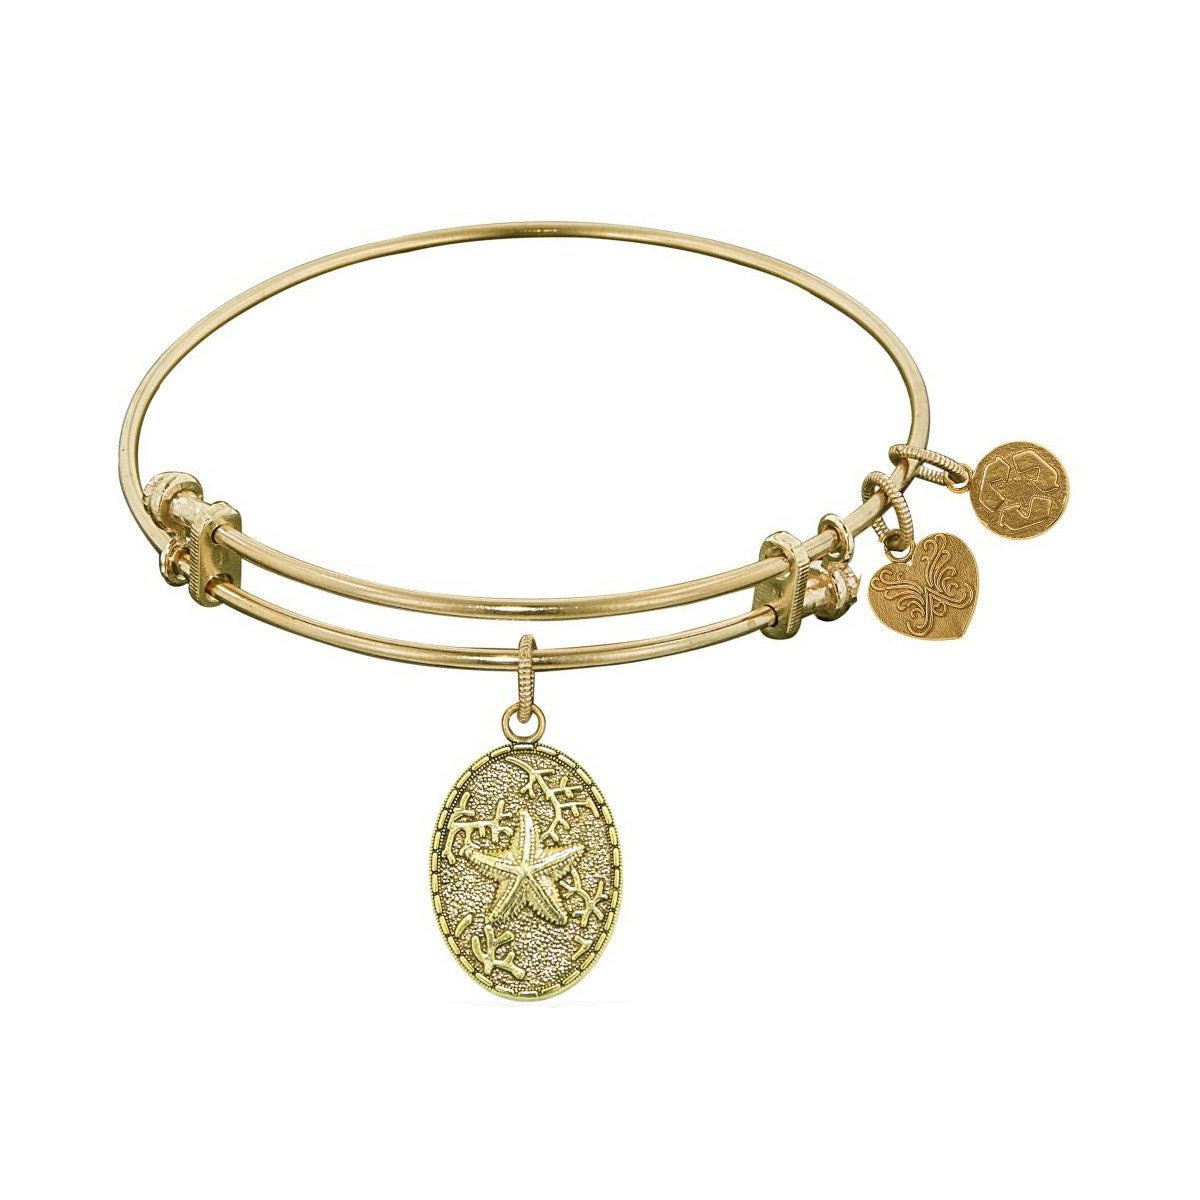 Stipple Finish Brass Starfish Angelica Bangle Bracelet, 7.25" fine designer jewelry for men and women